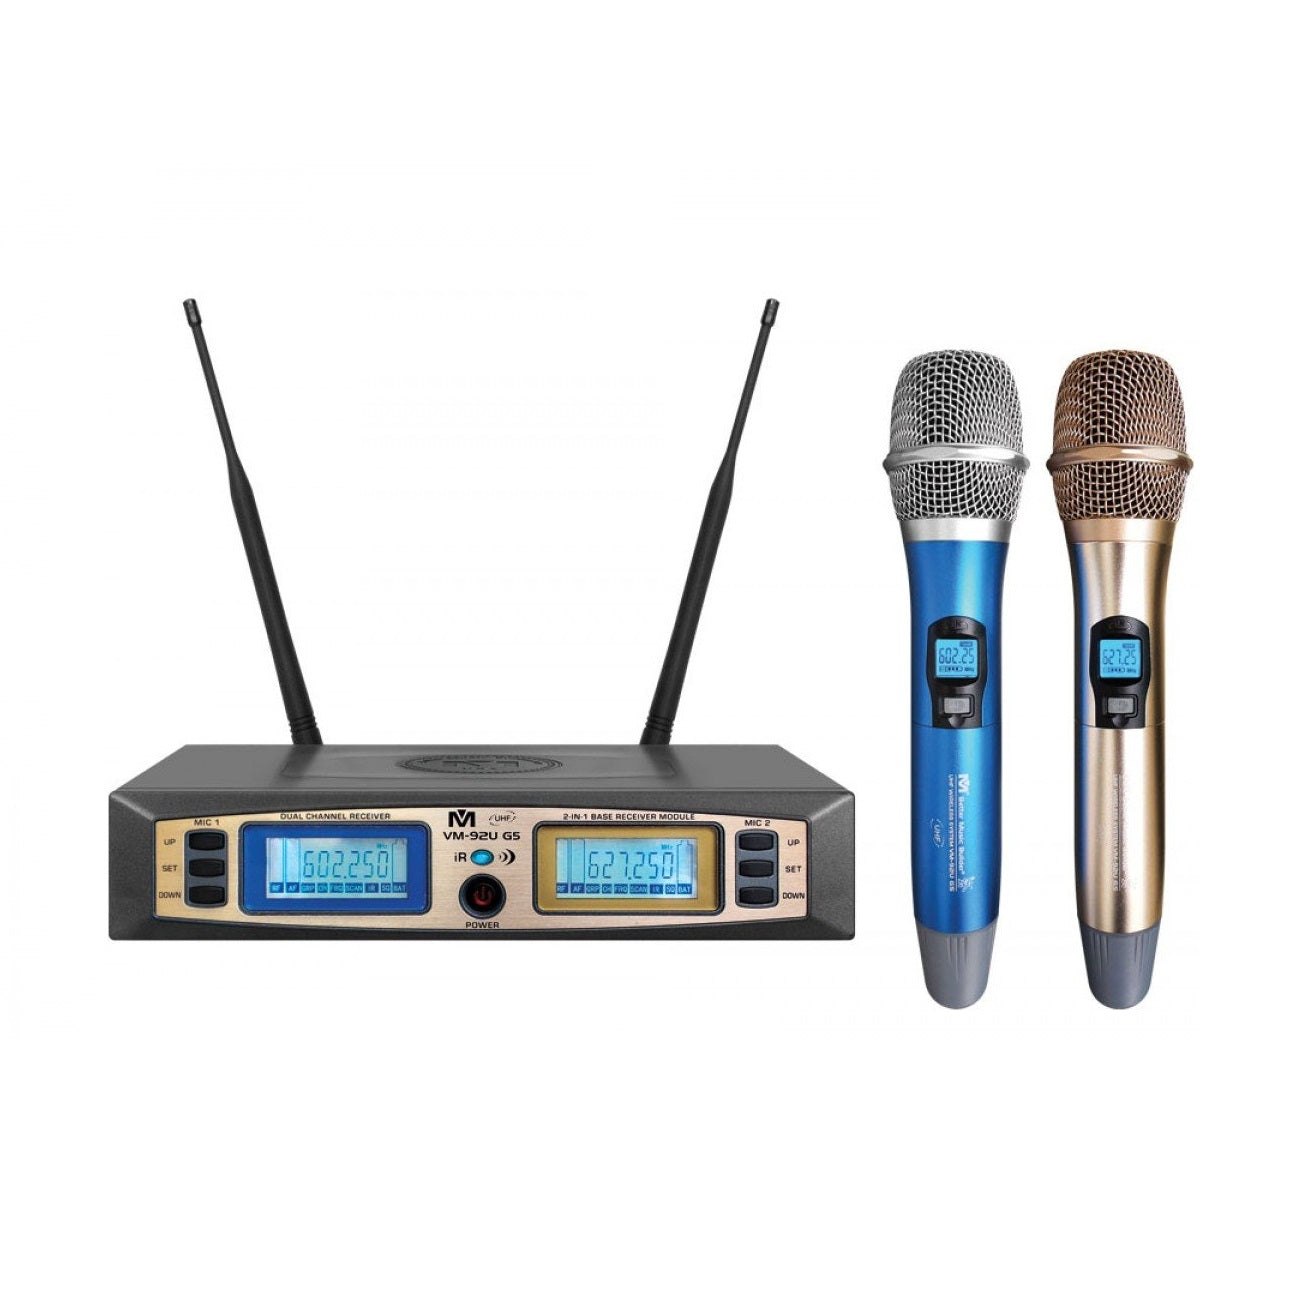 Better Music Builder VM-92U G5 Dual Channel UHF Wireless Microphone System